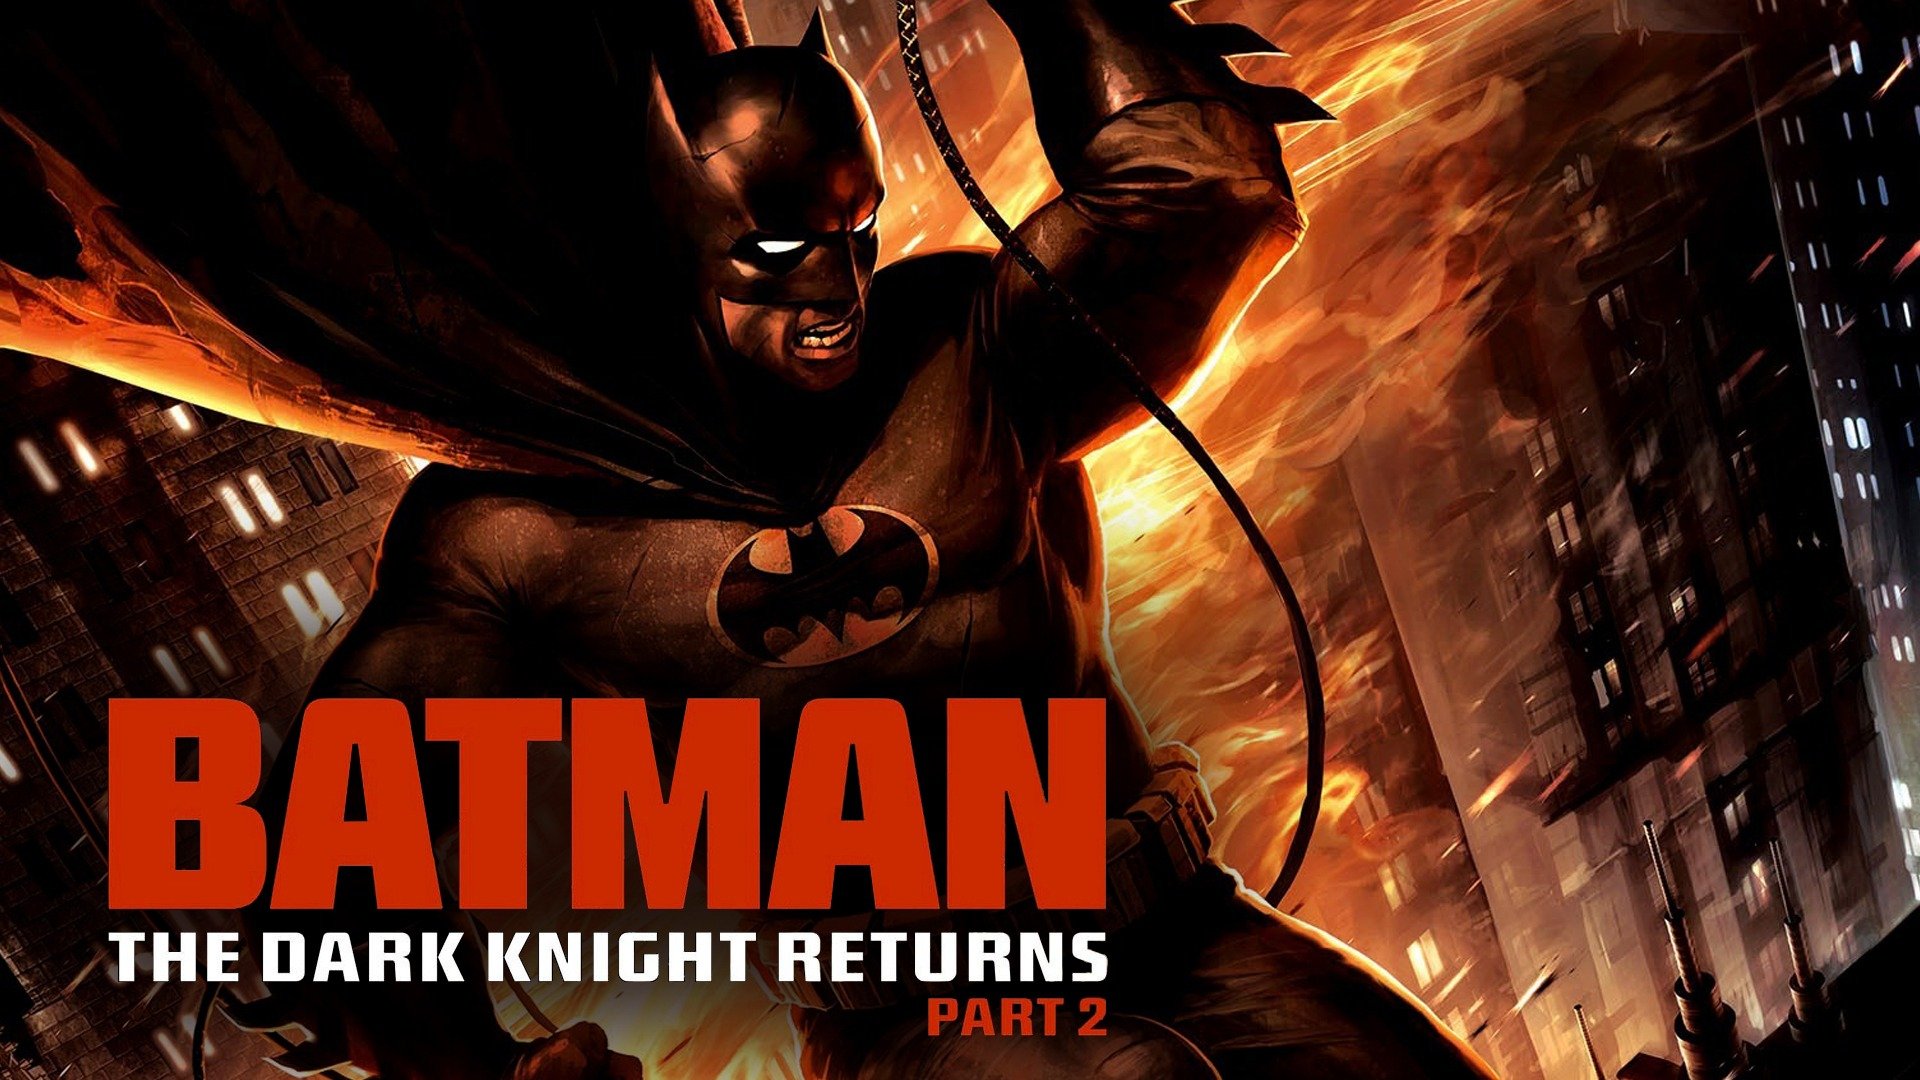 Batman Returns' Was the Peak of Grotesque Superhero Cinema - The Ringer